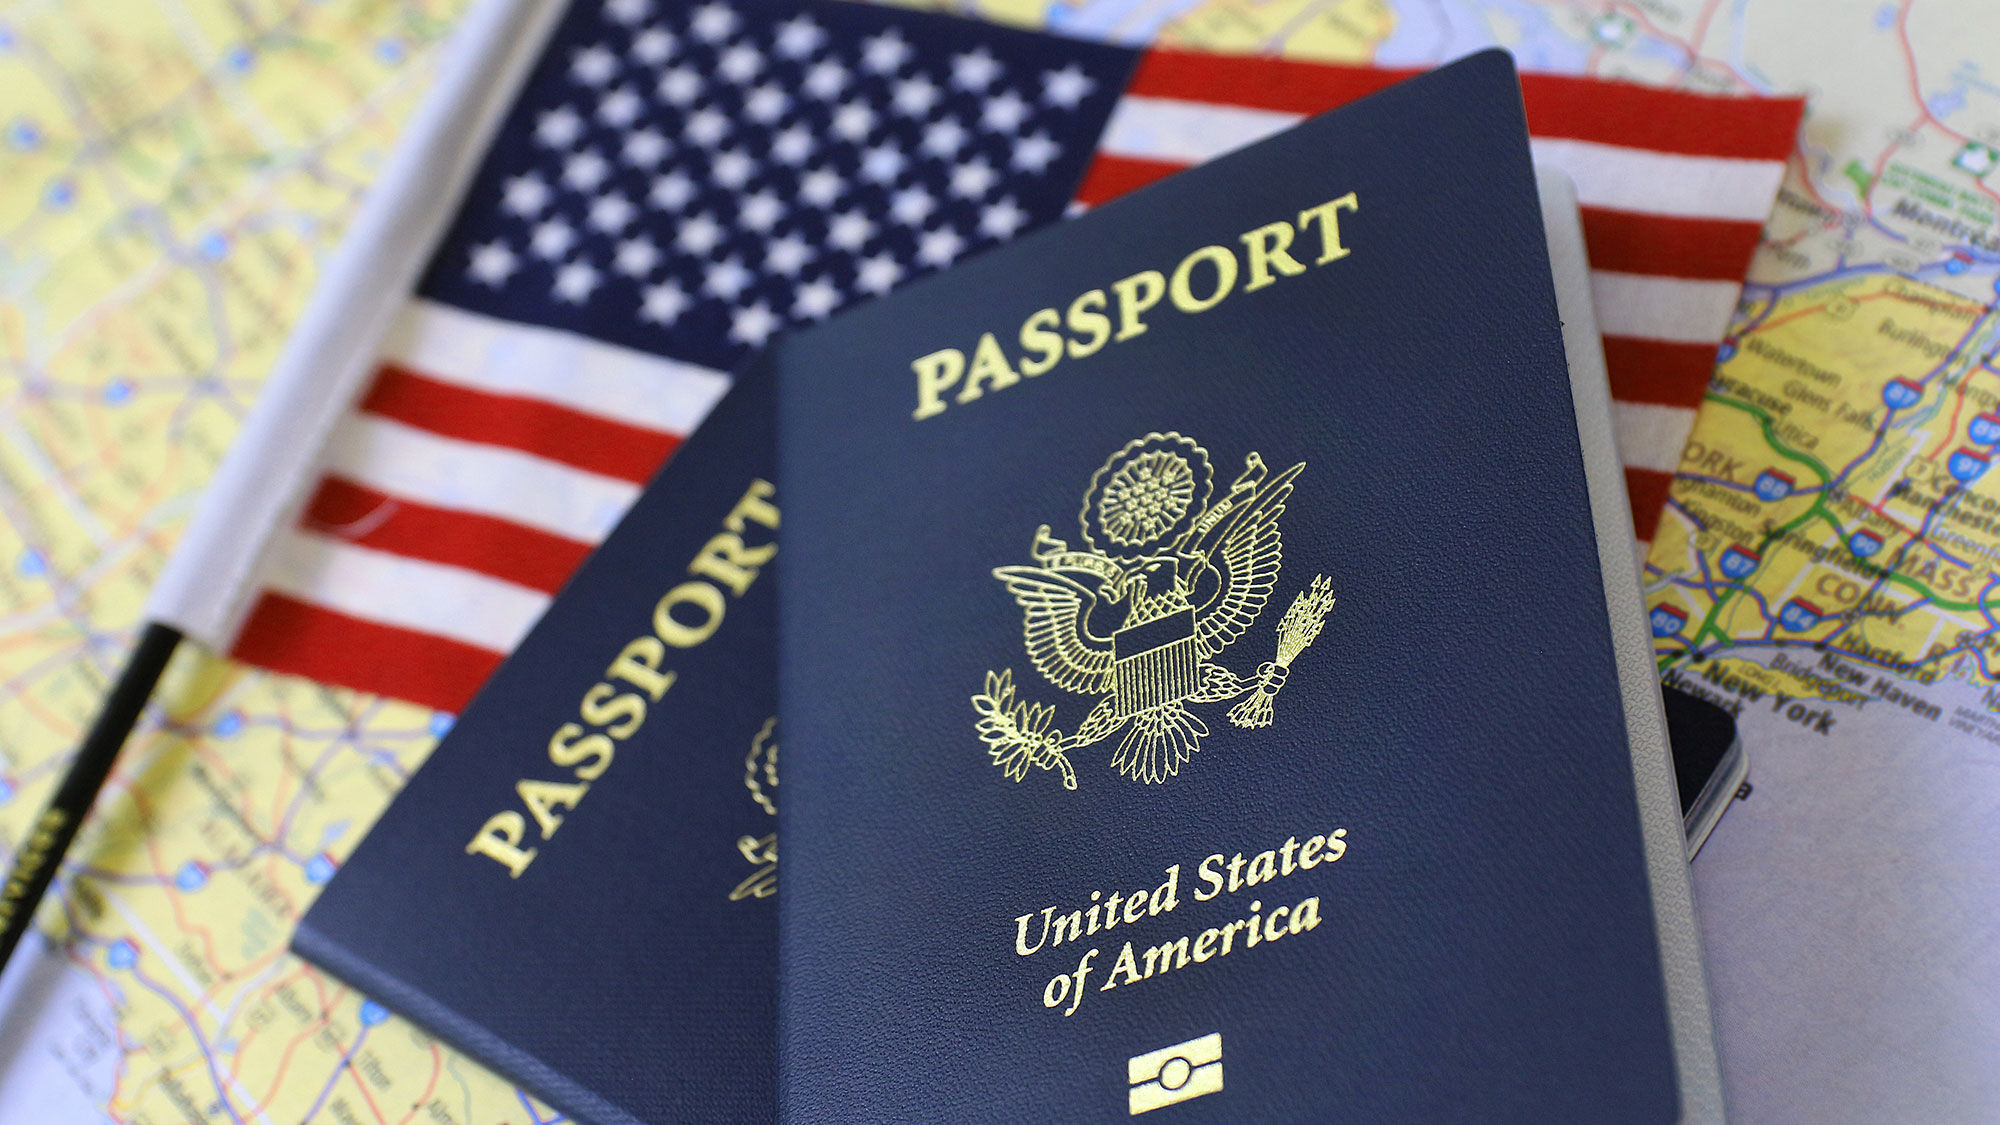 US passport [Credit: Pia Harris Photography/Shutterstock.com]